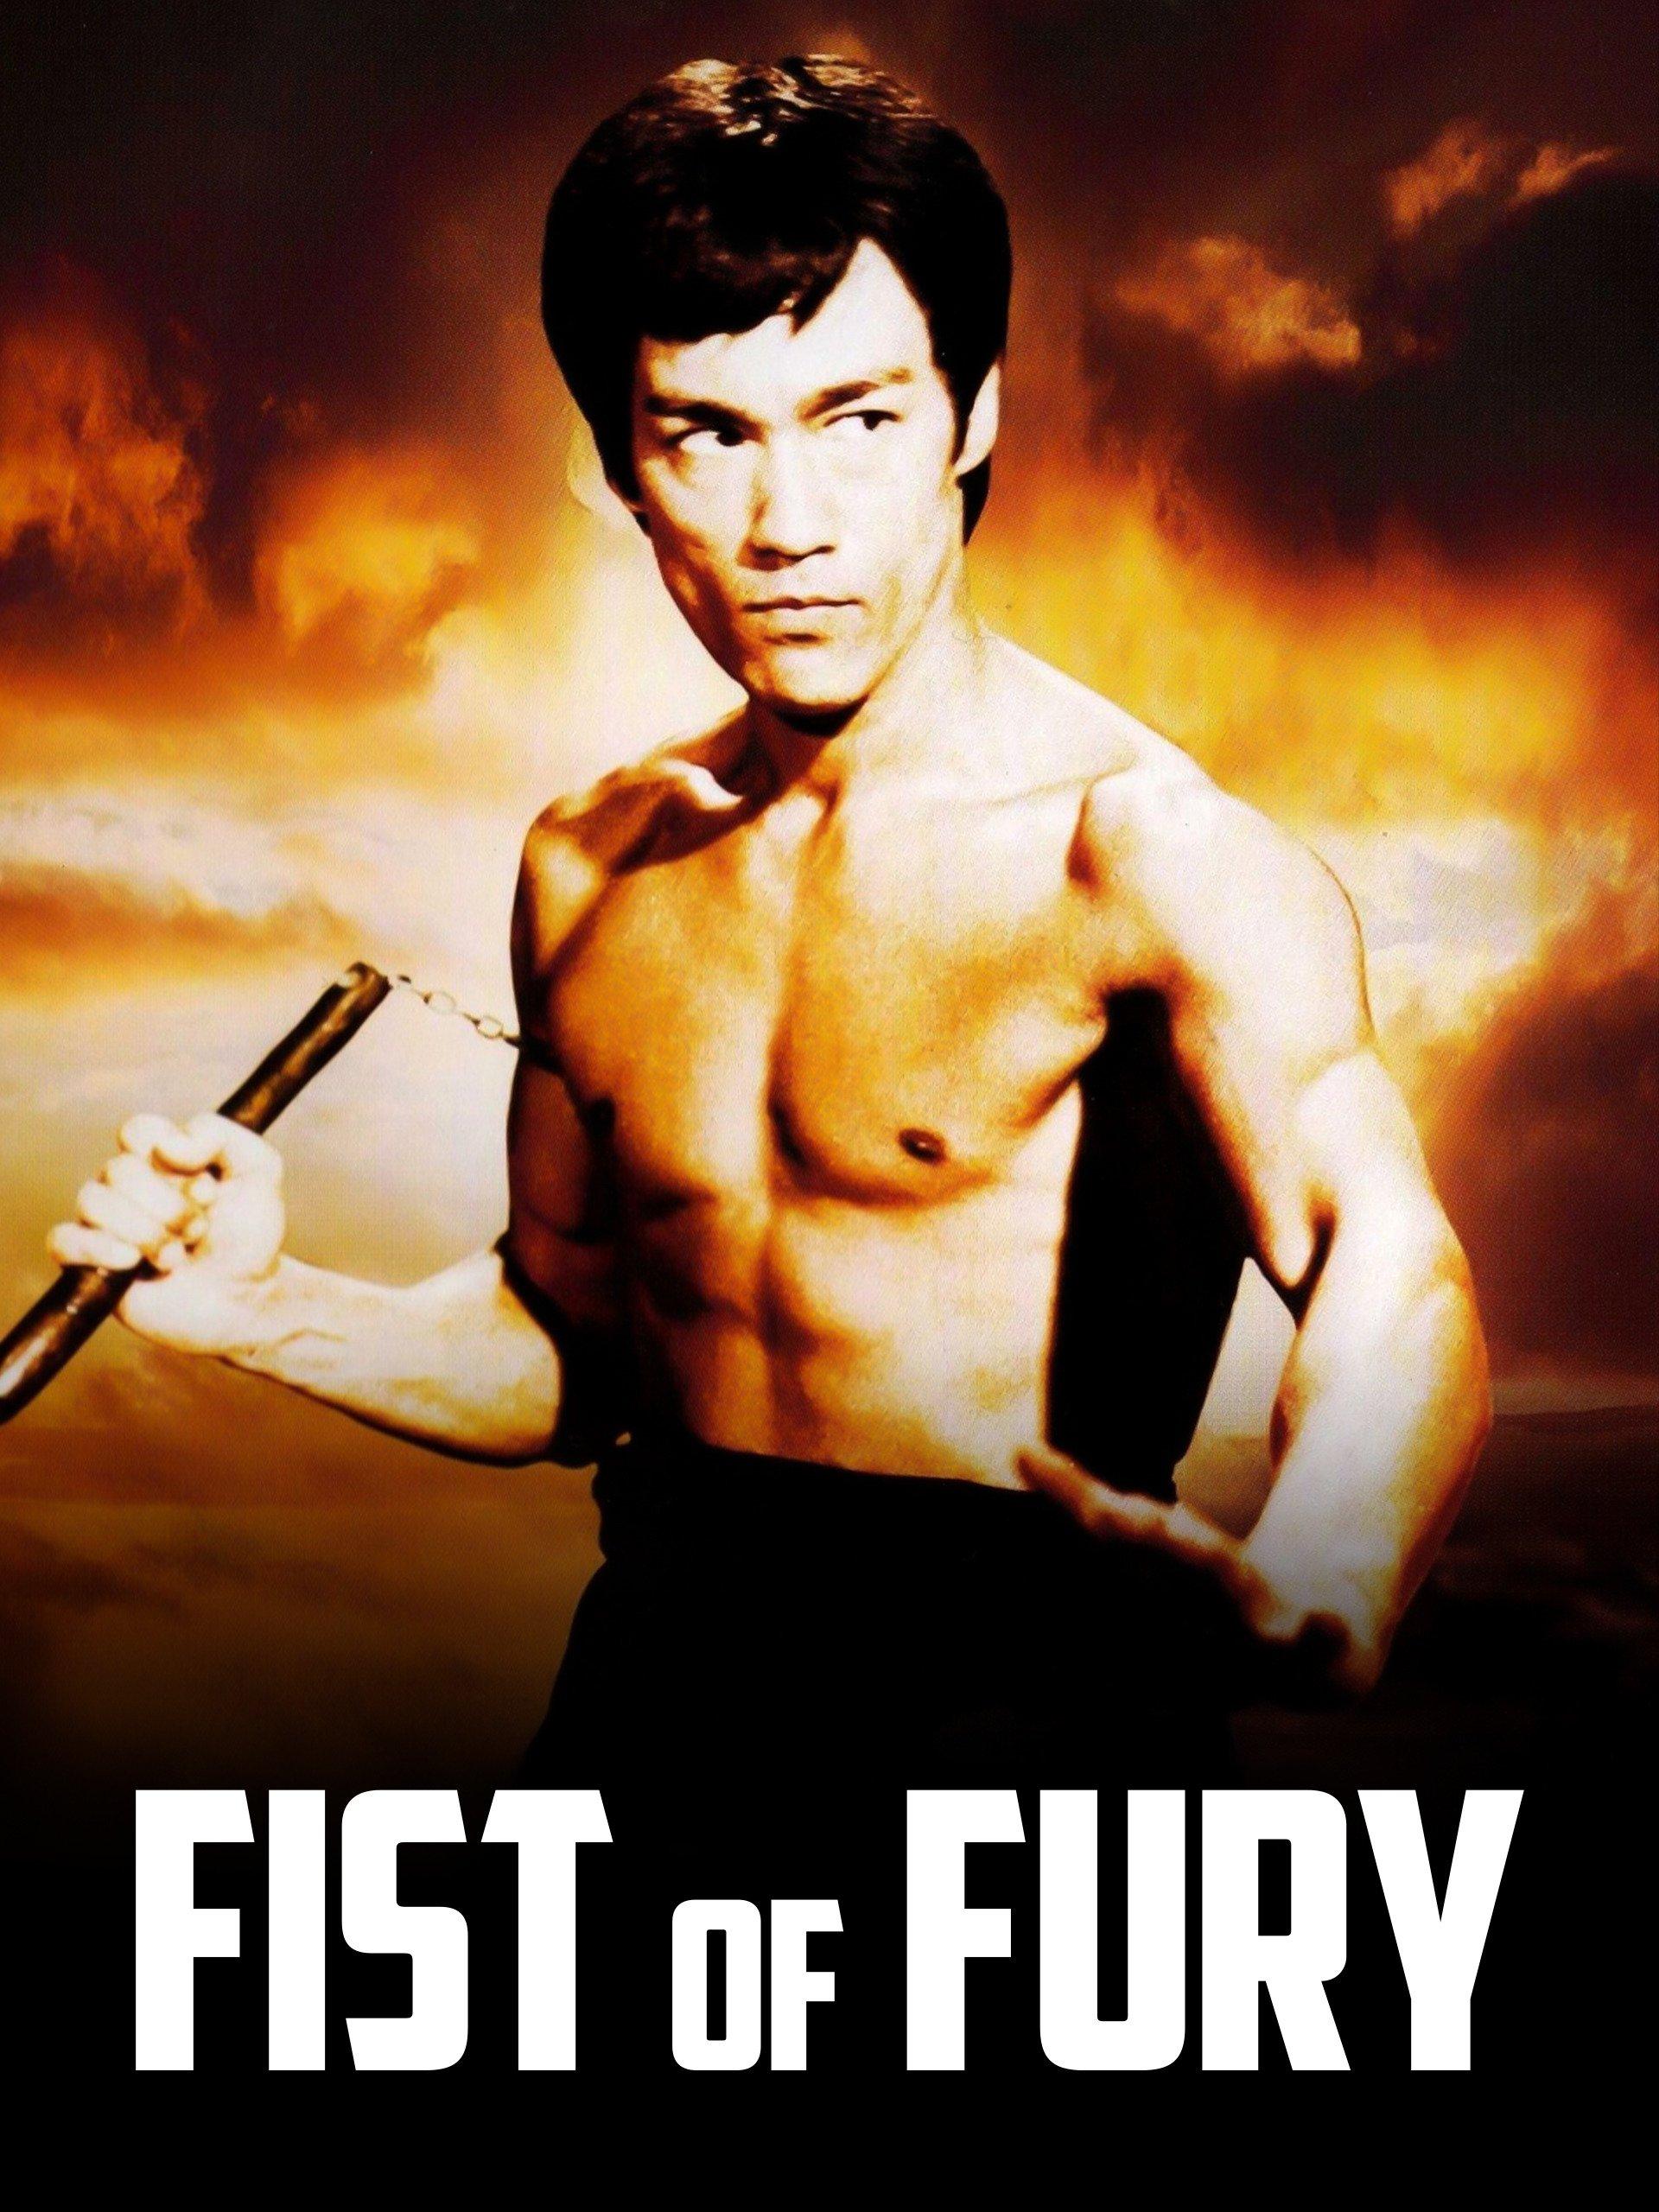 Fist of fury english